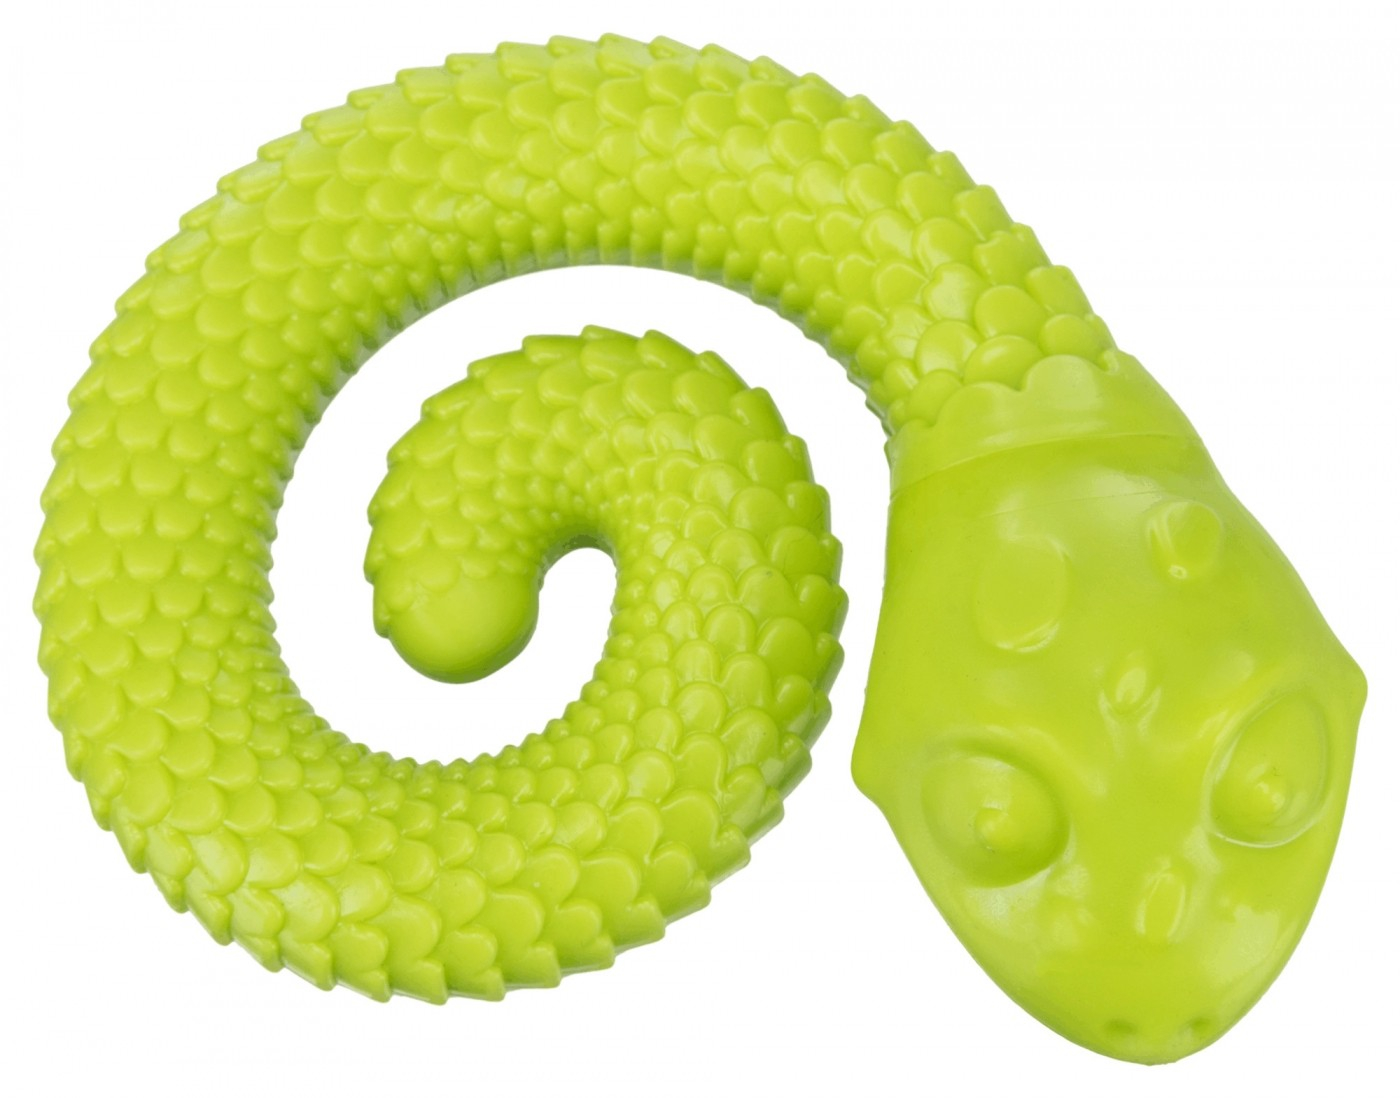 Coda con premi Snack Snake in gomma, diametro 18 cm